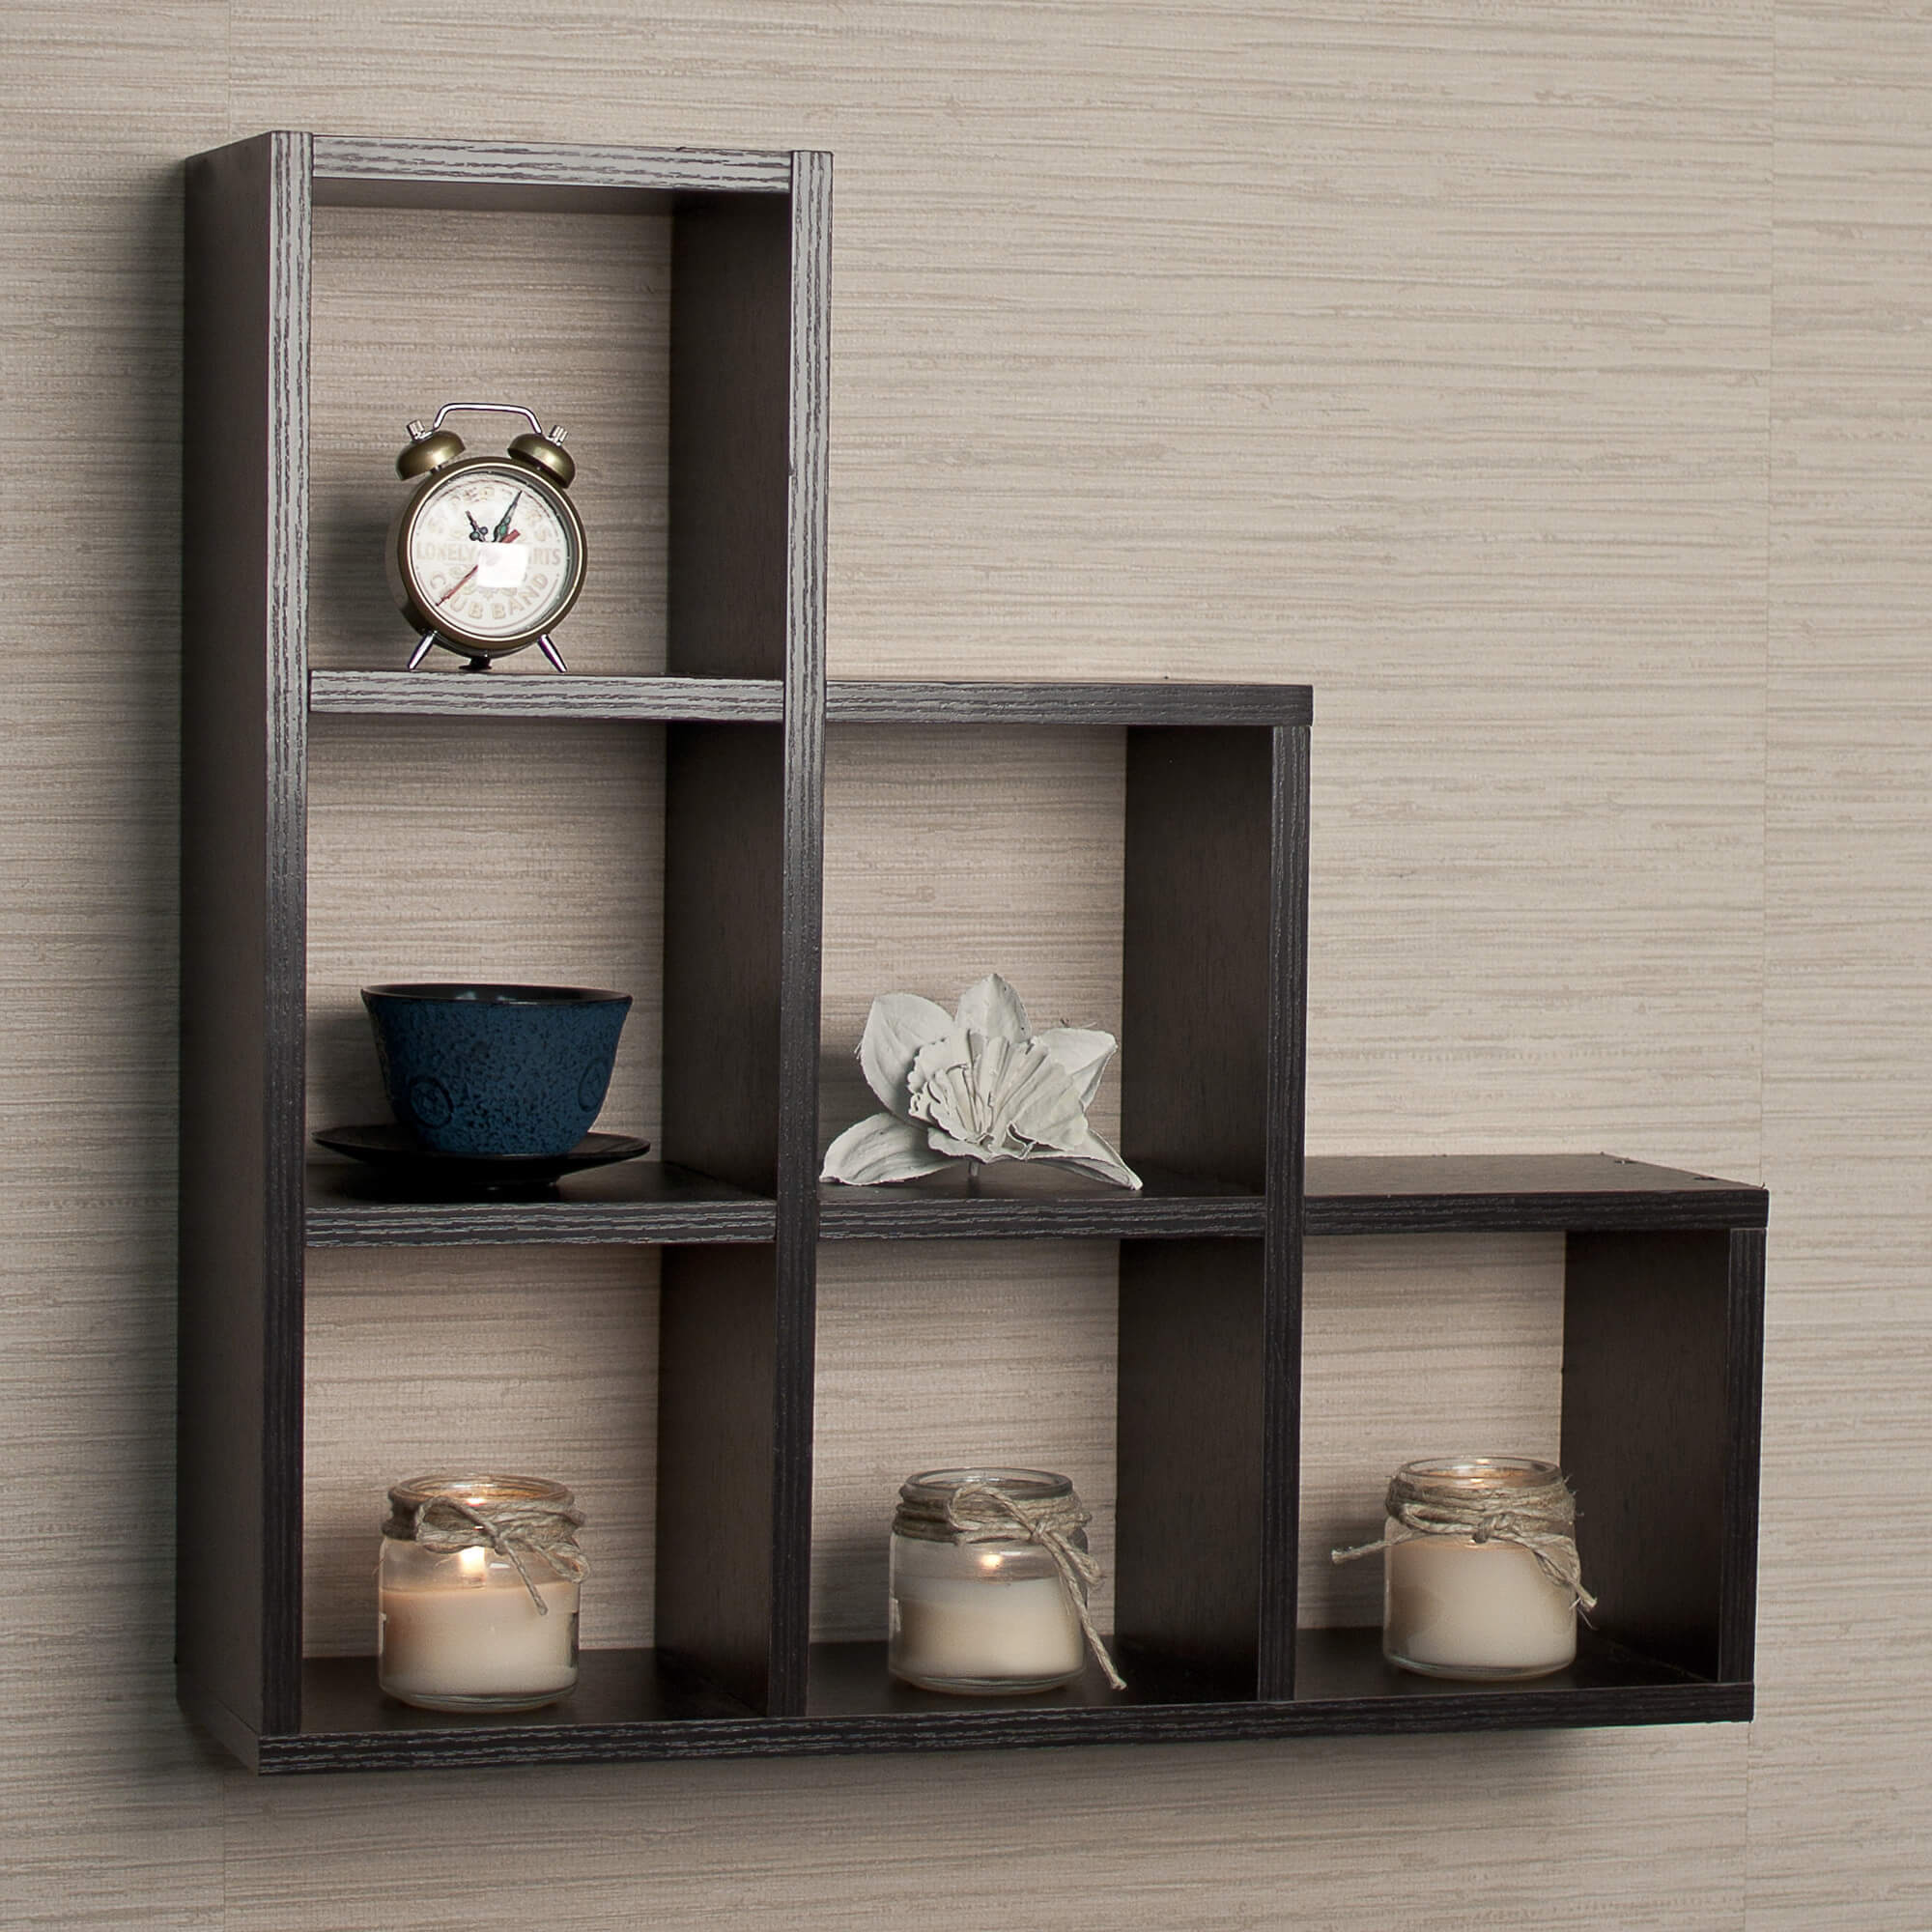 wall mounted shelves design photo - 10